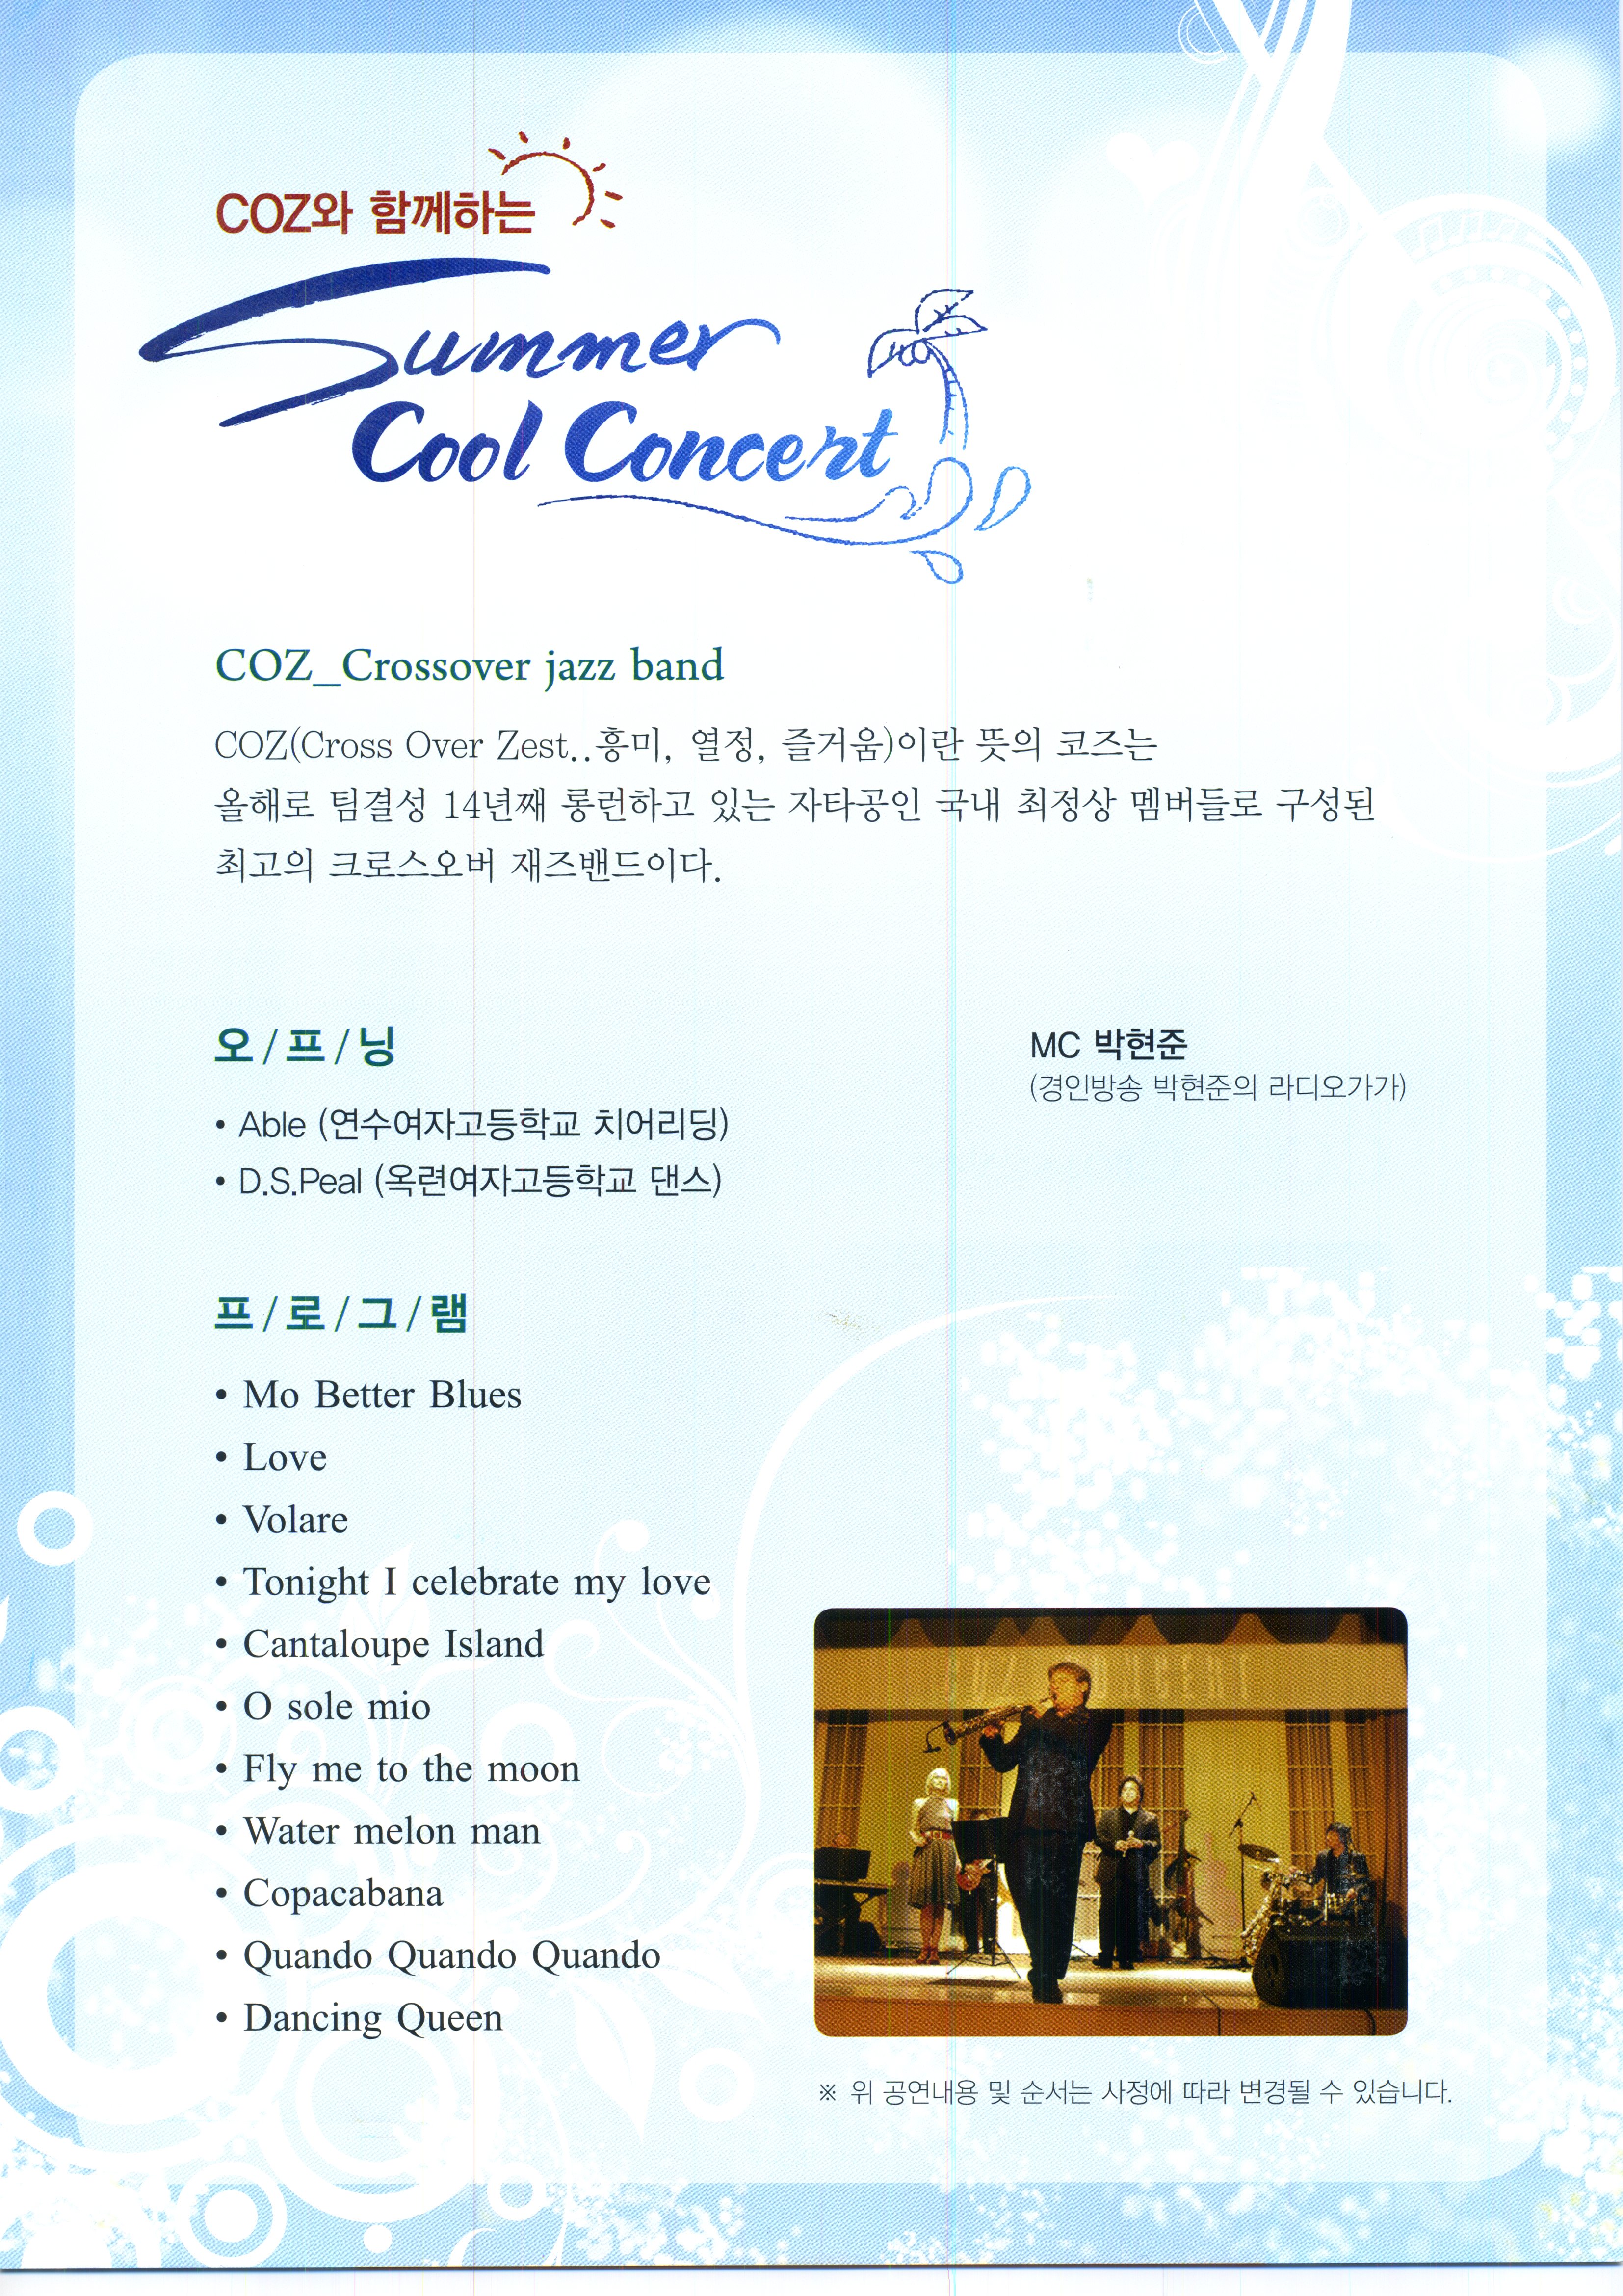 COZ와 함께하는 Summer Cool Concert 공연포스터 - 자세한 내용은 상세보기의 공연소개를 참고해주세요.